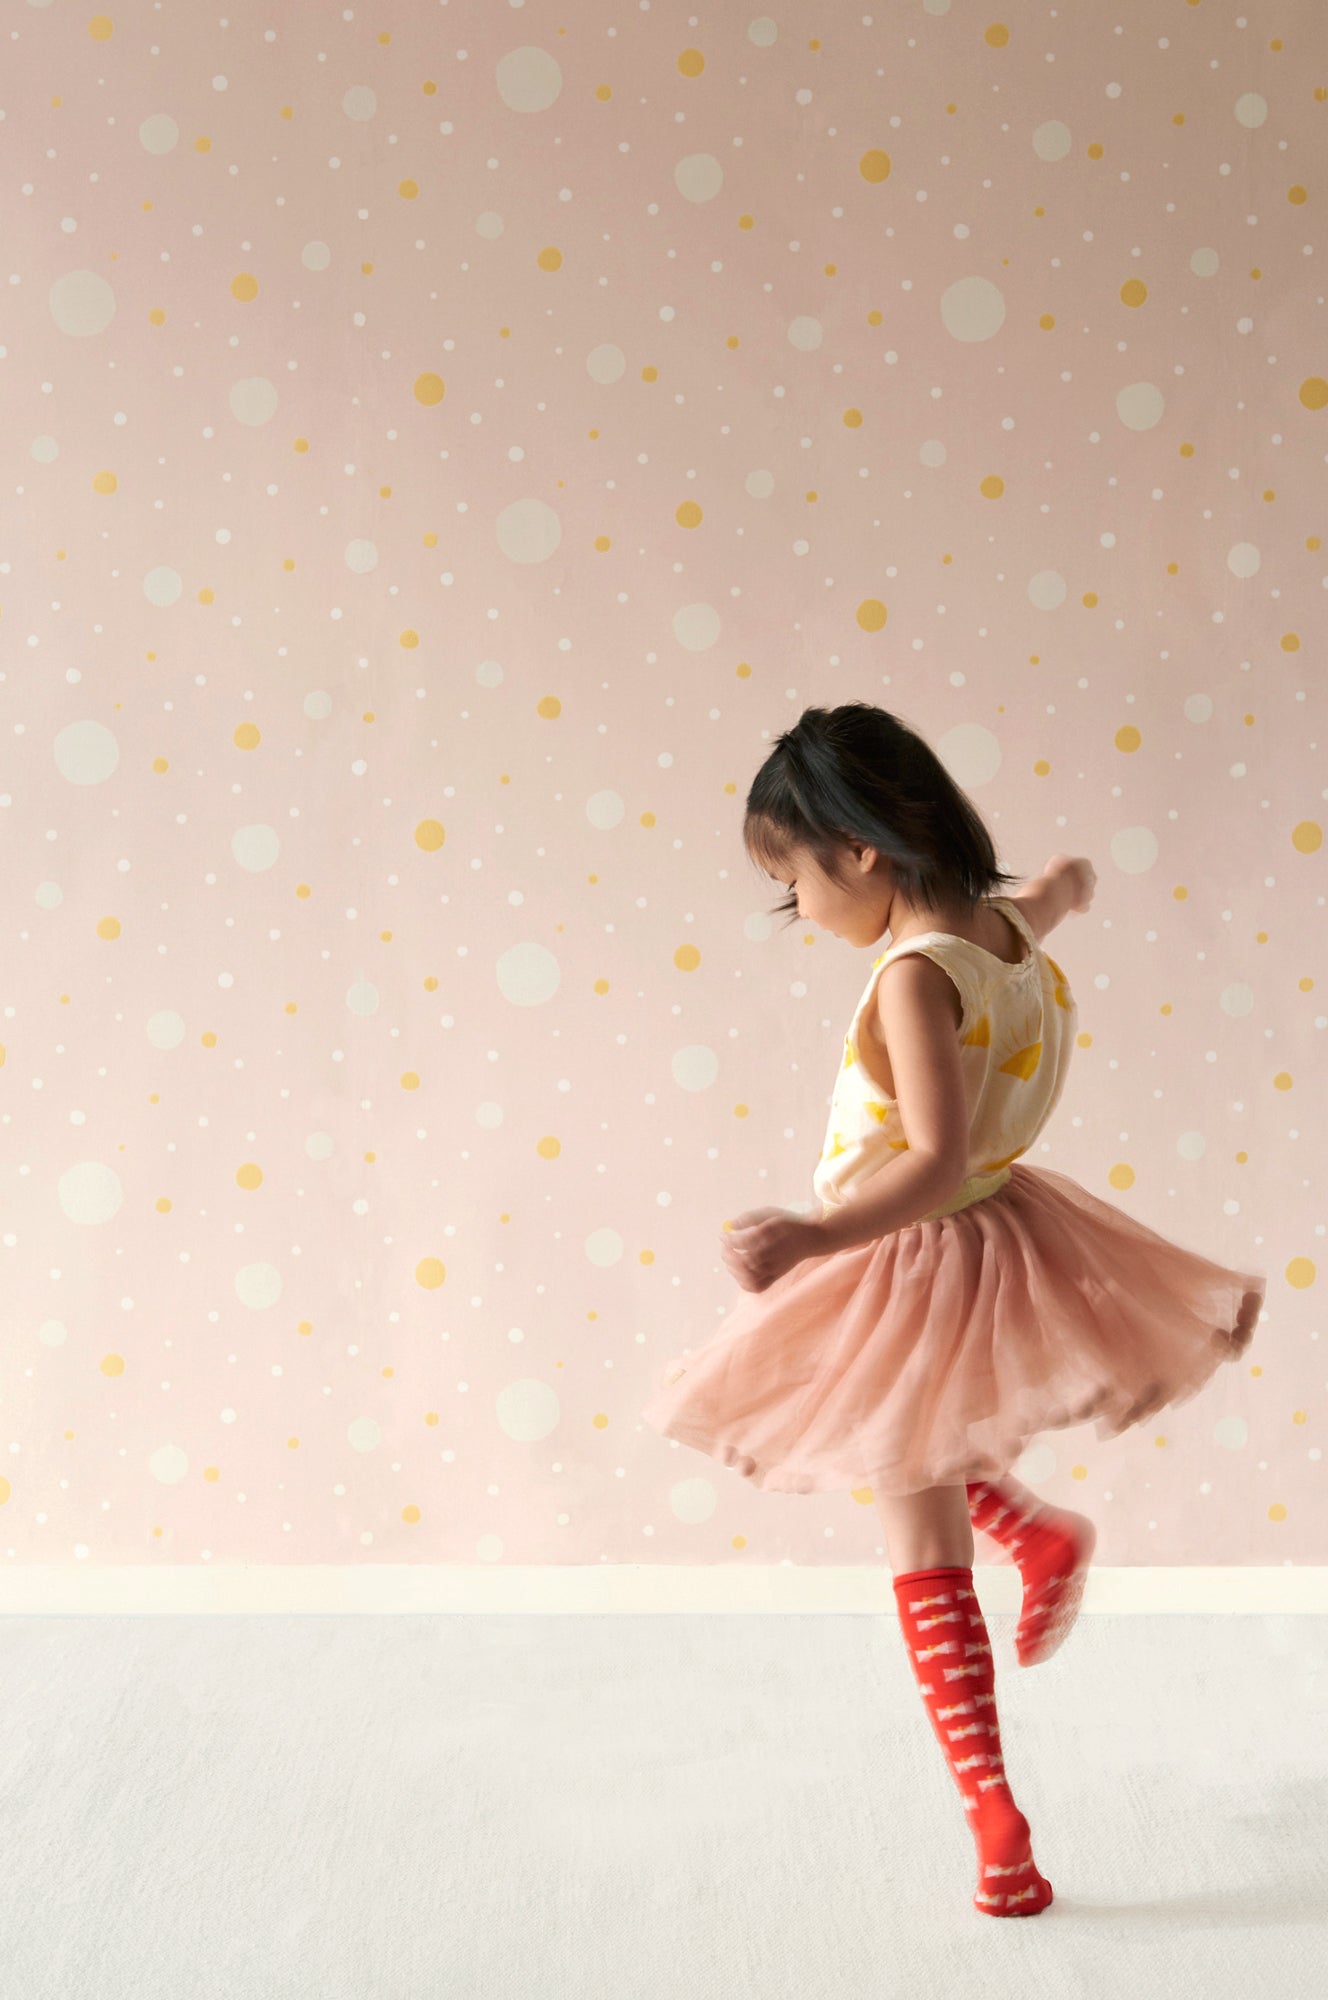 Confetti Soft Pink Wallpaper - Majvillan